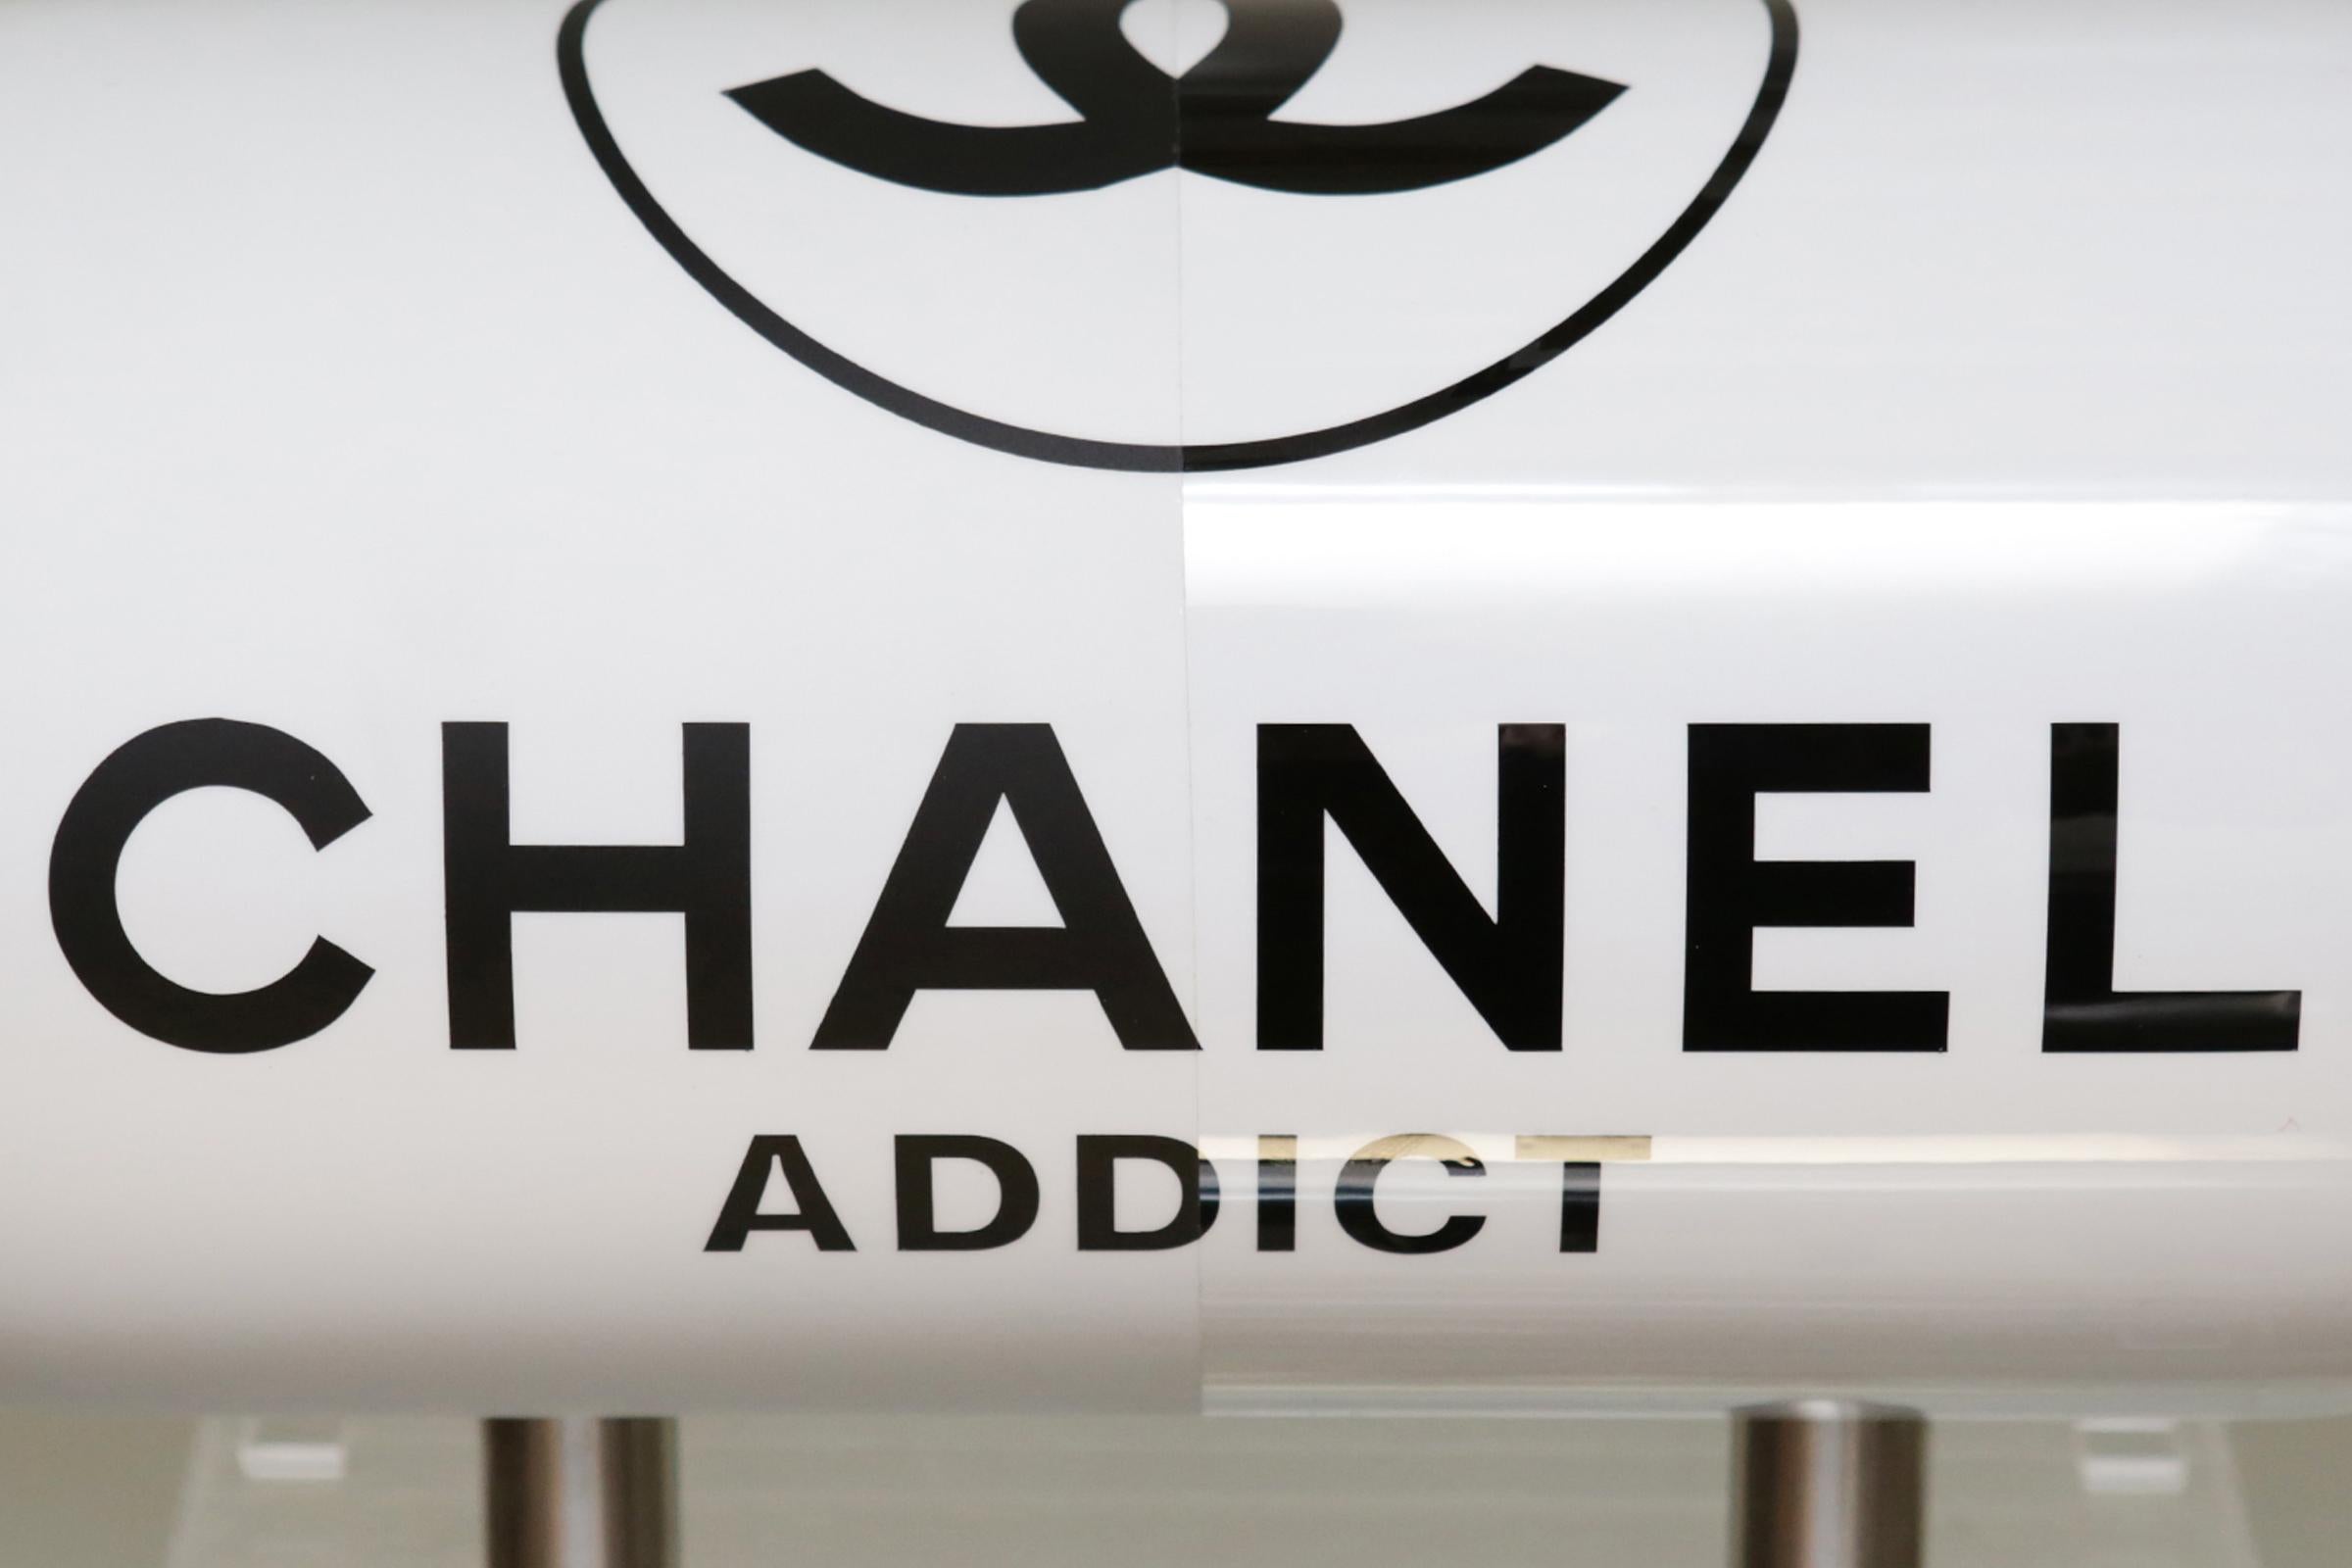 Dutch Pill Chanel Addict White Sculpture